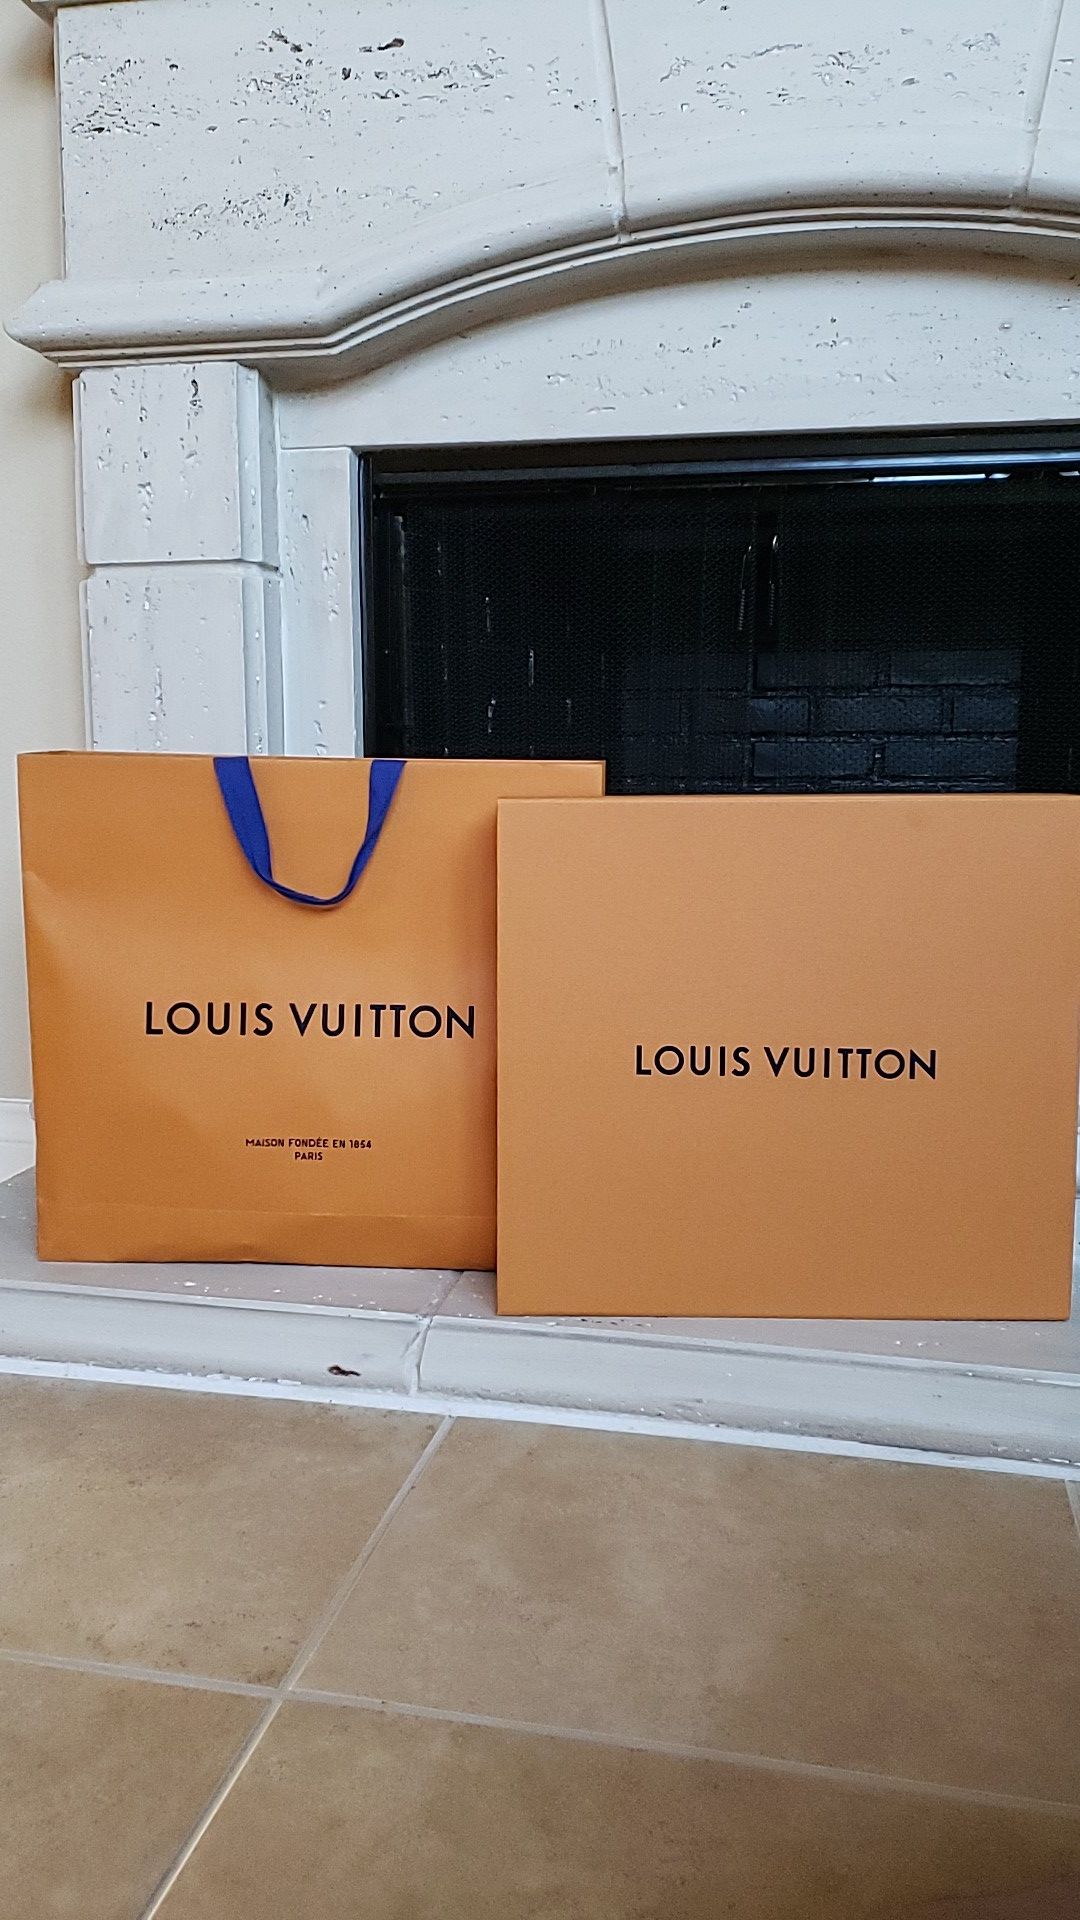 LOUIS VUITTON Shopping Bag and Keepsake Box